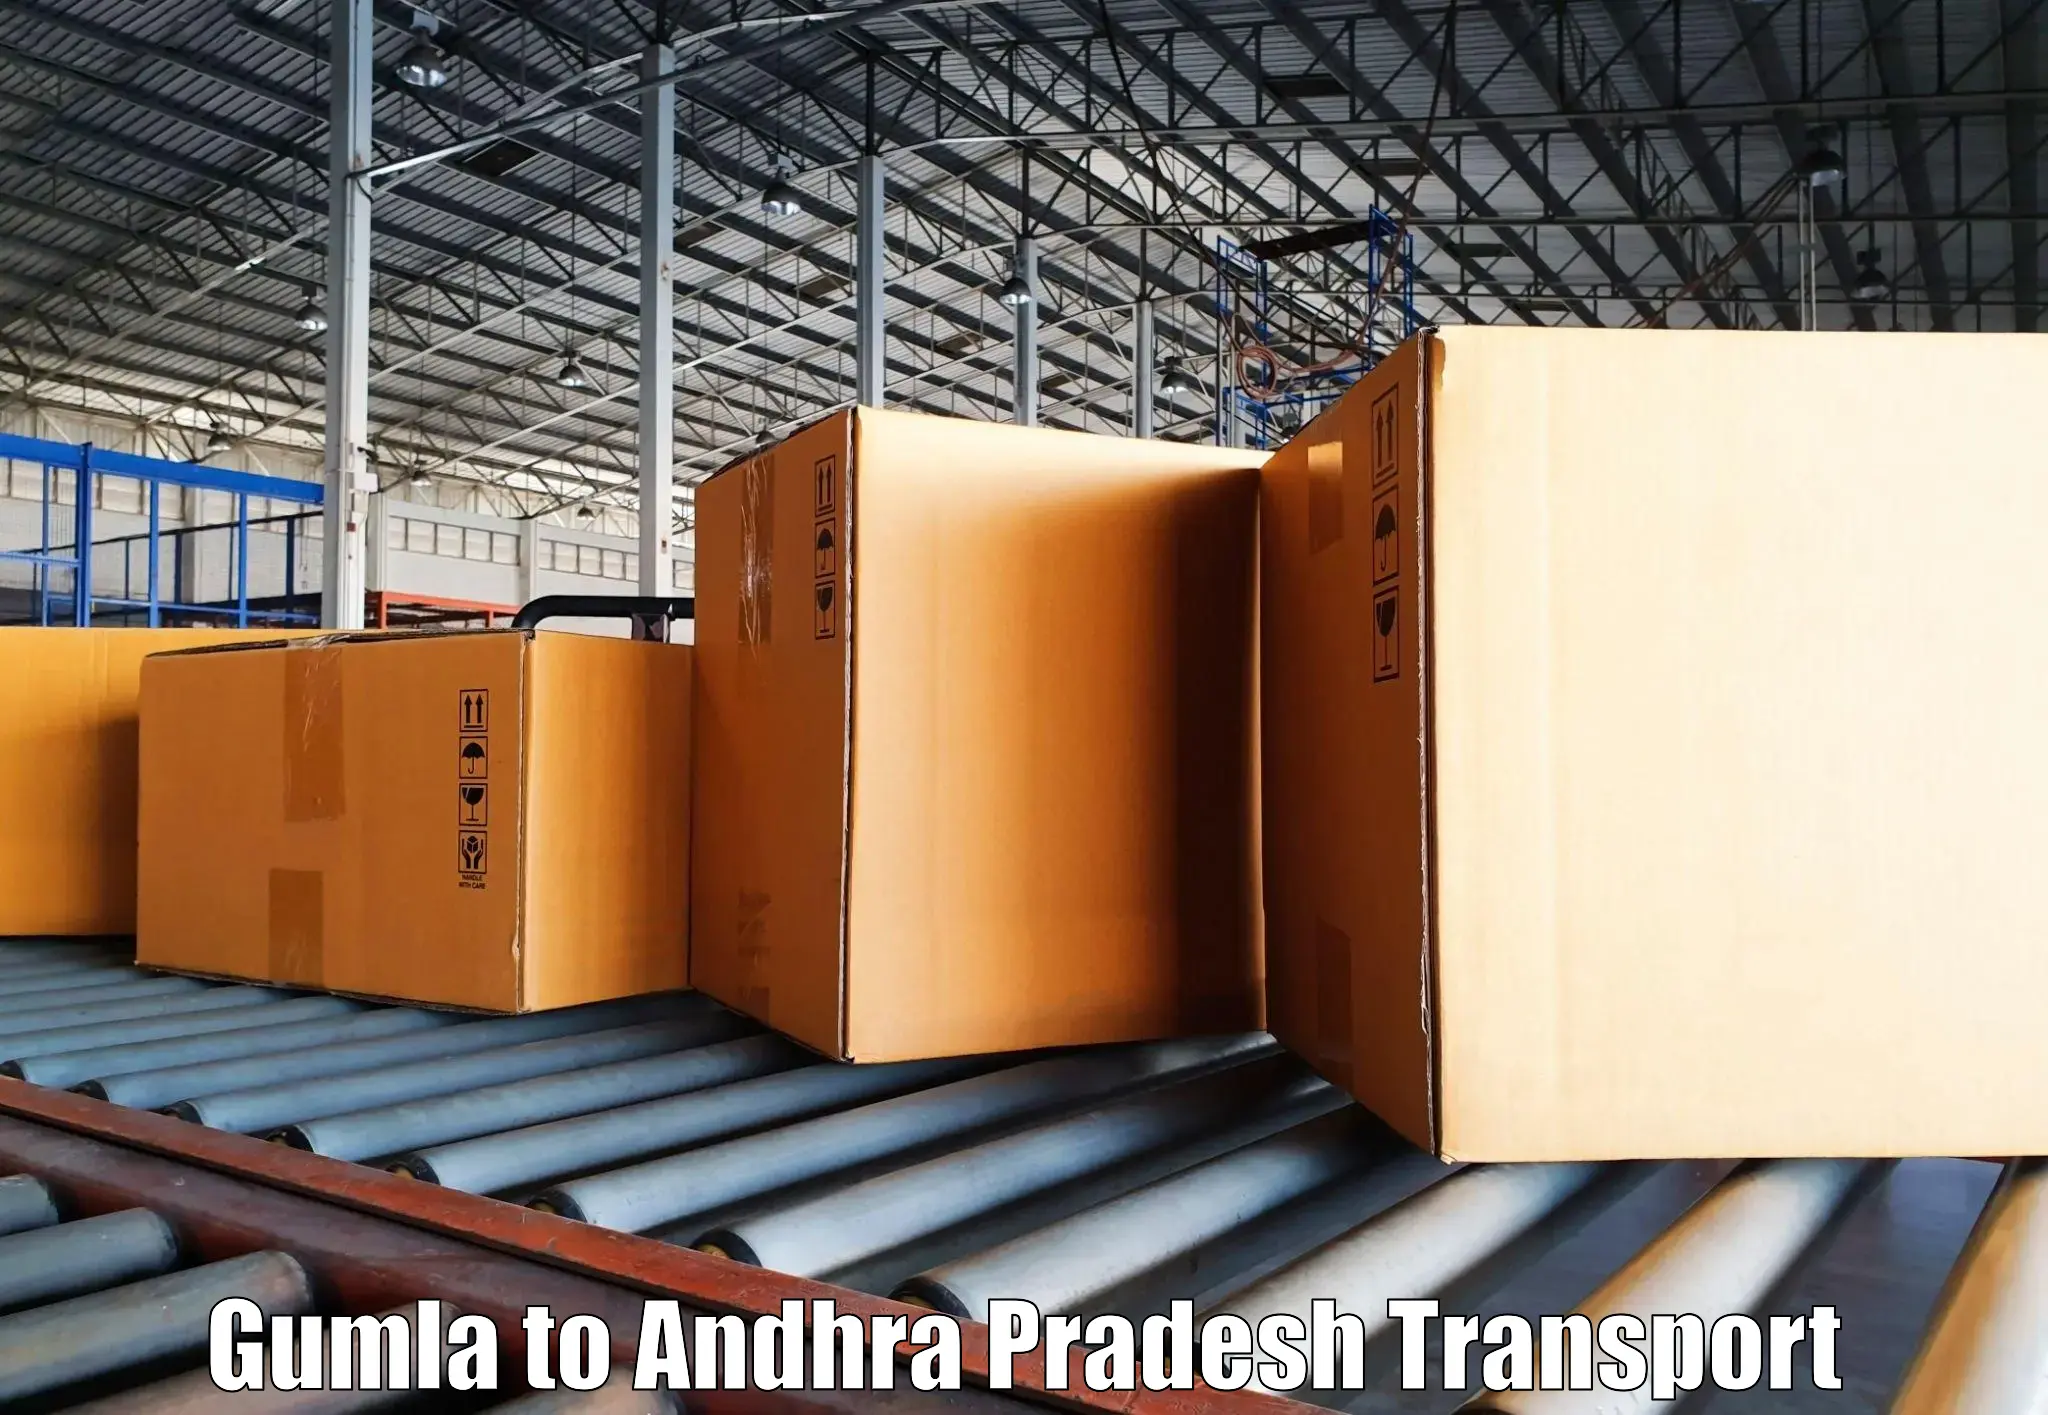 Furniture transport service Gumla to Vijayawada